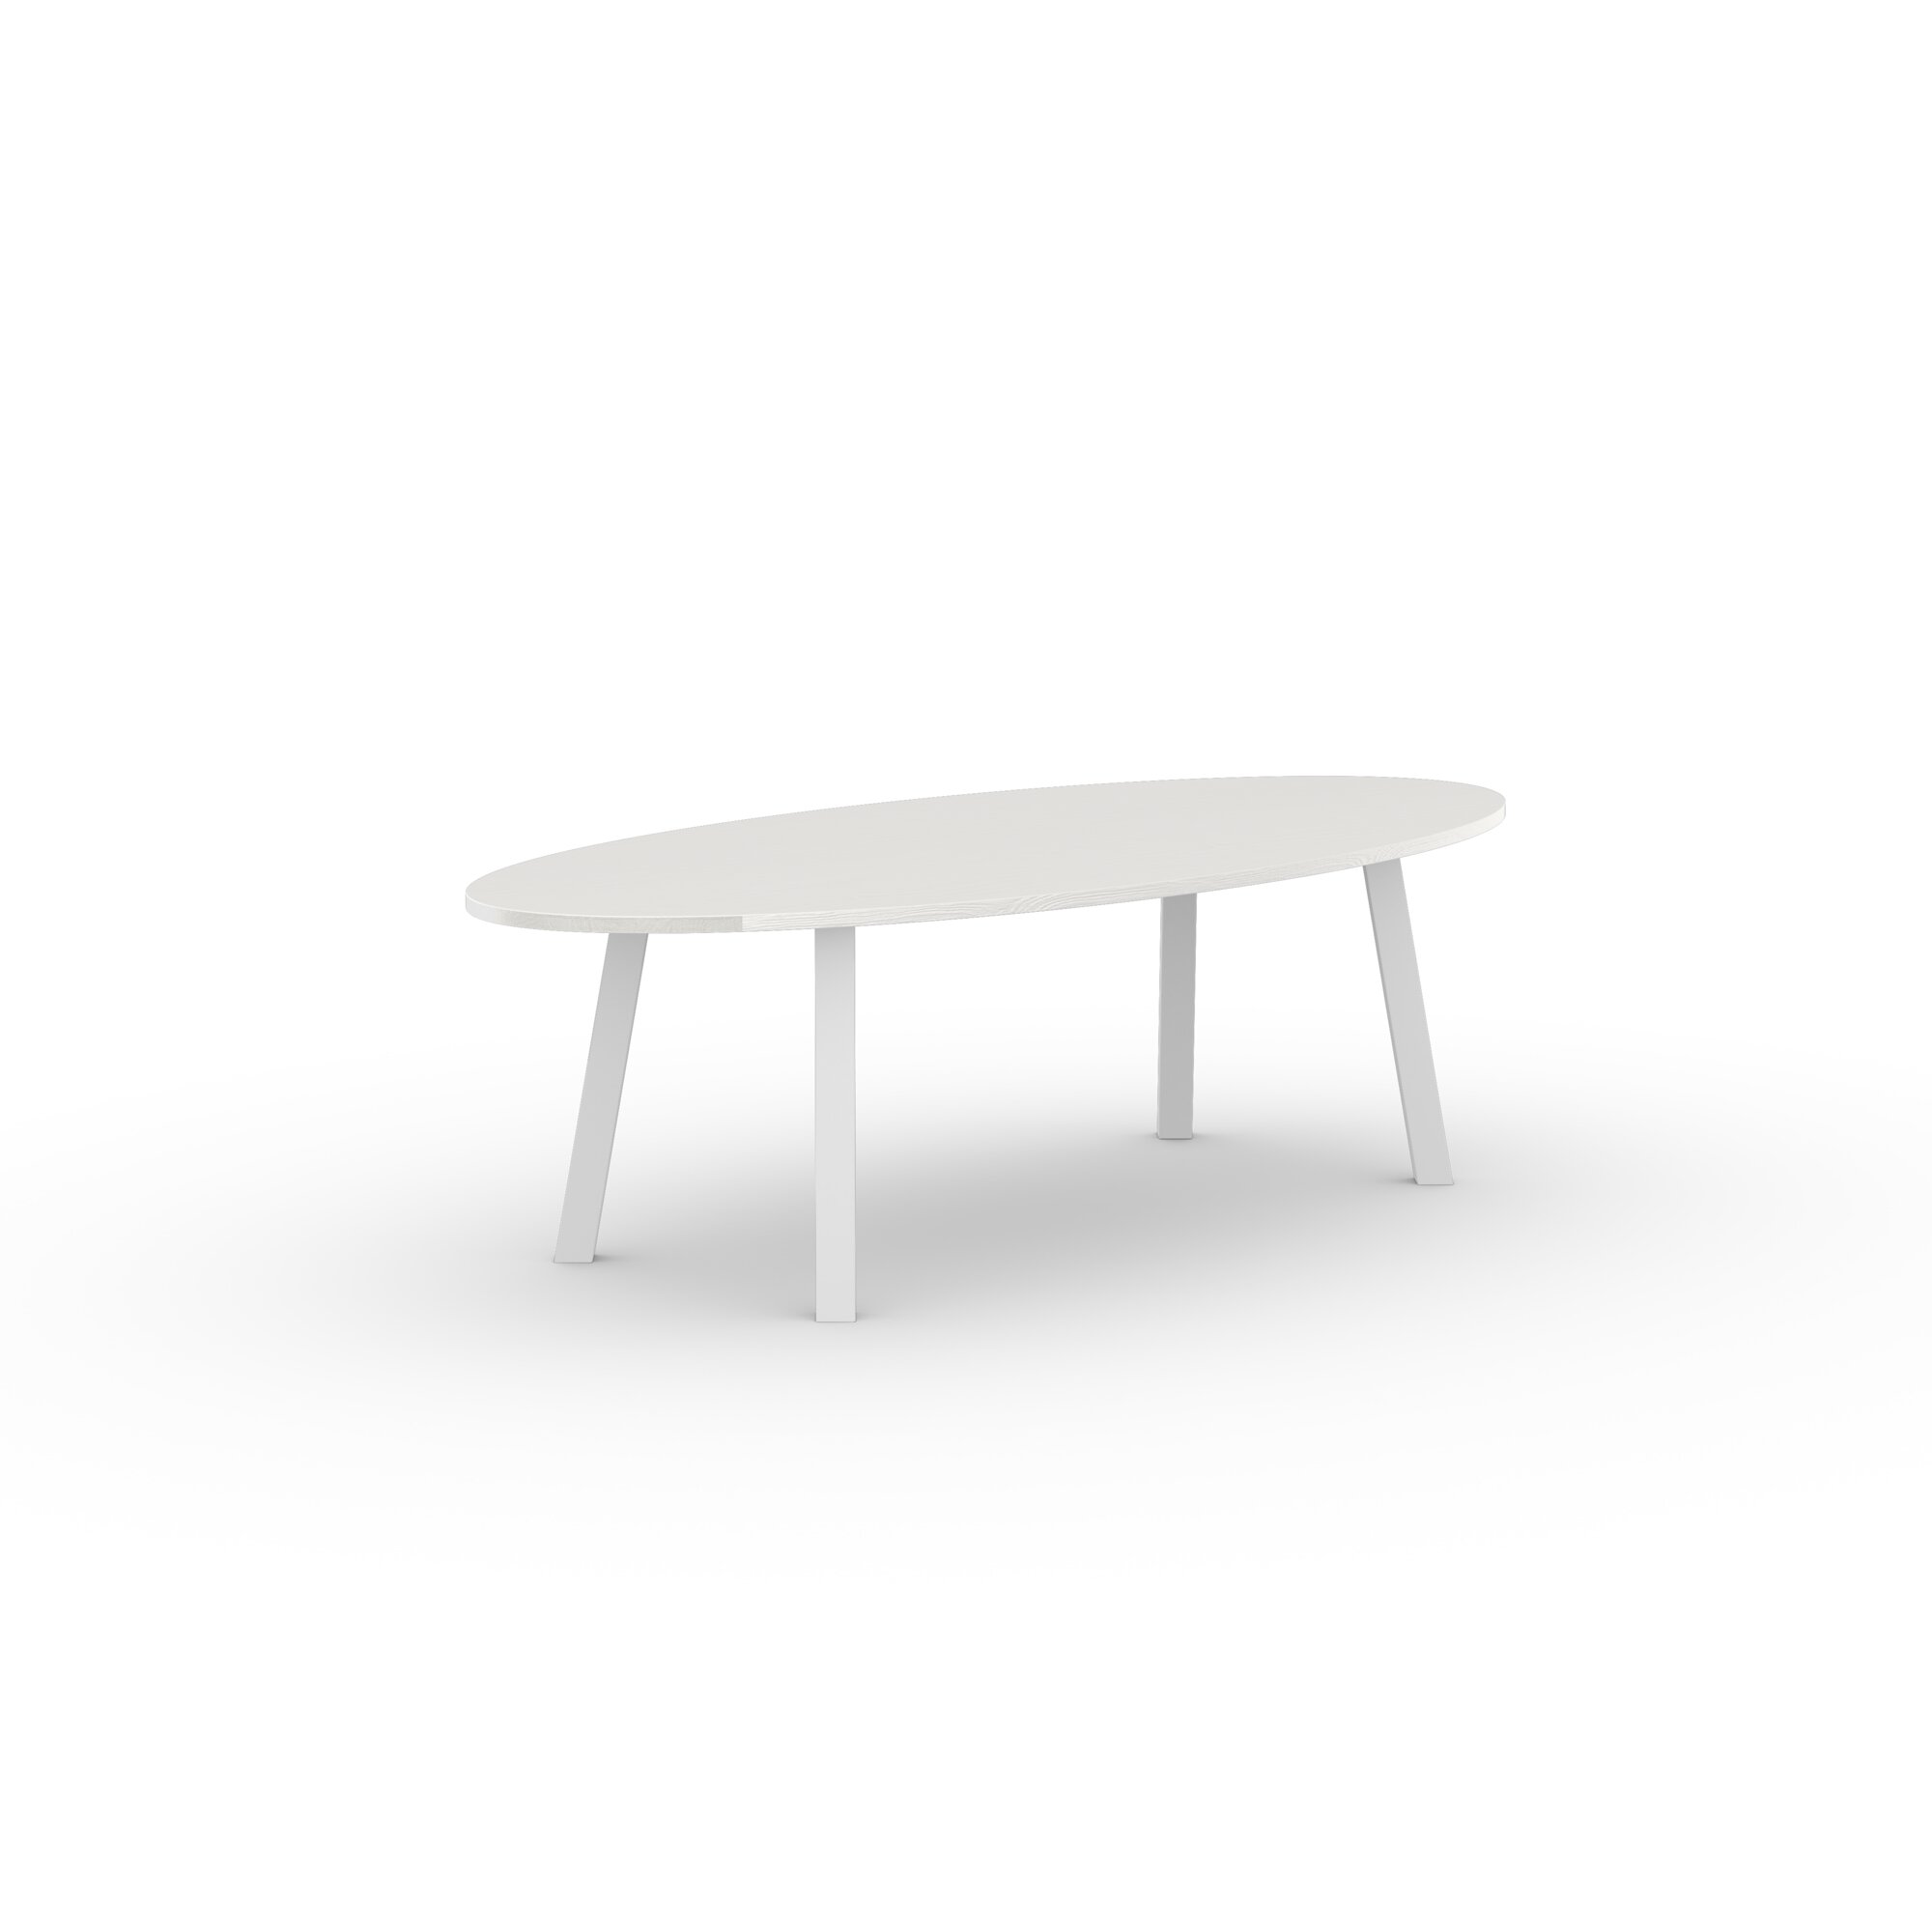 Ovale Design dining table | Co Steel white powdercoating | Oak white lacquer | Studio HENK| 